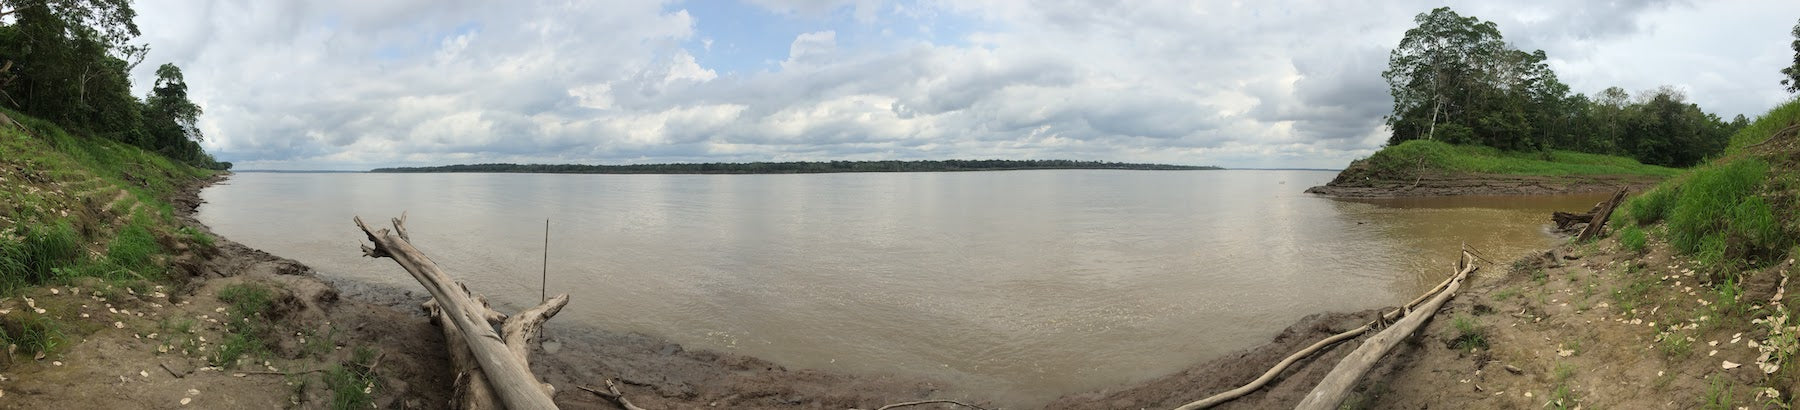 Amazon River Bed